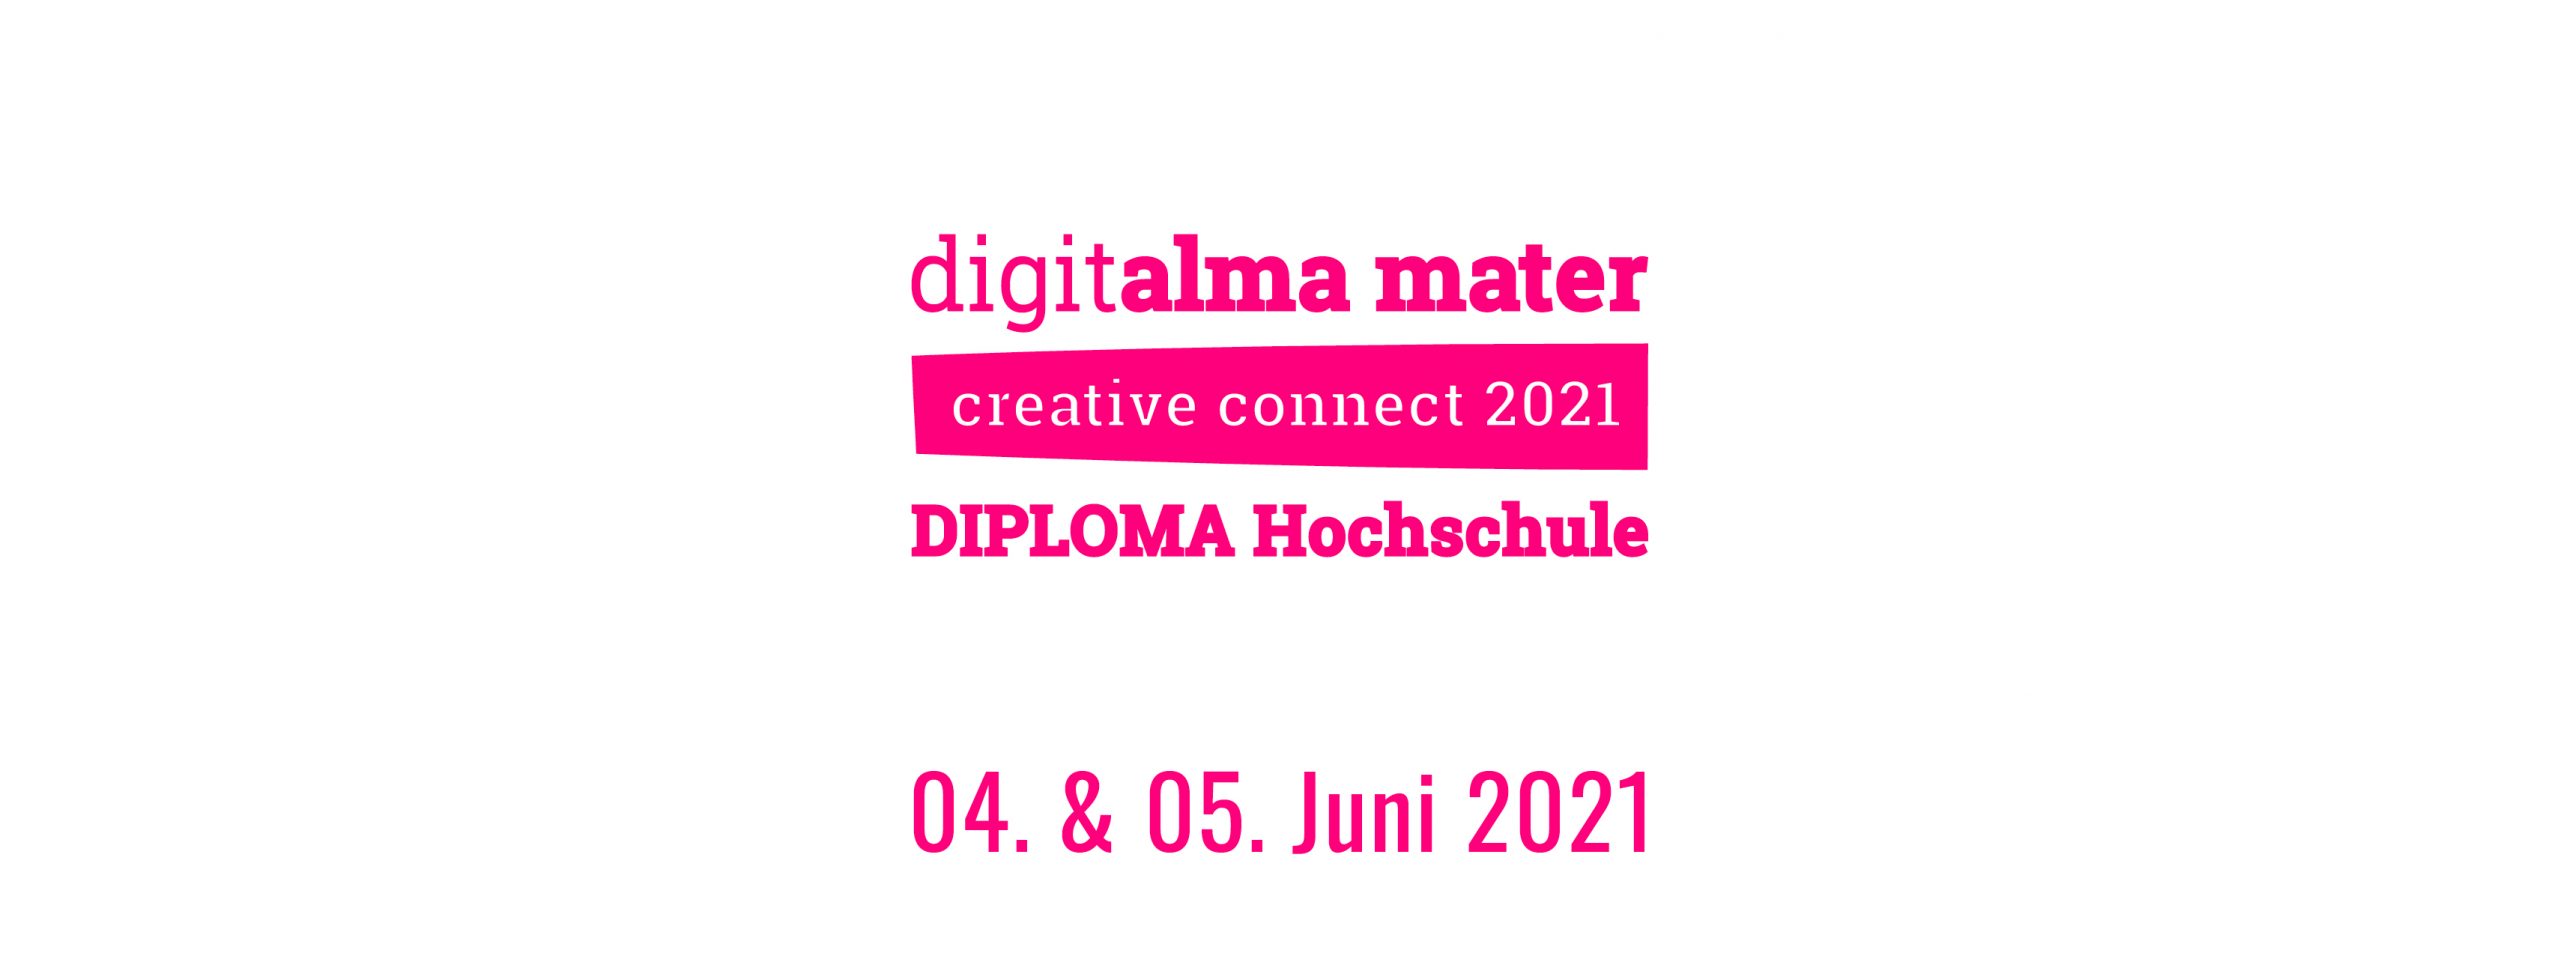 Logo digitalma mater Creative Connect 2021 SS